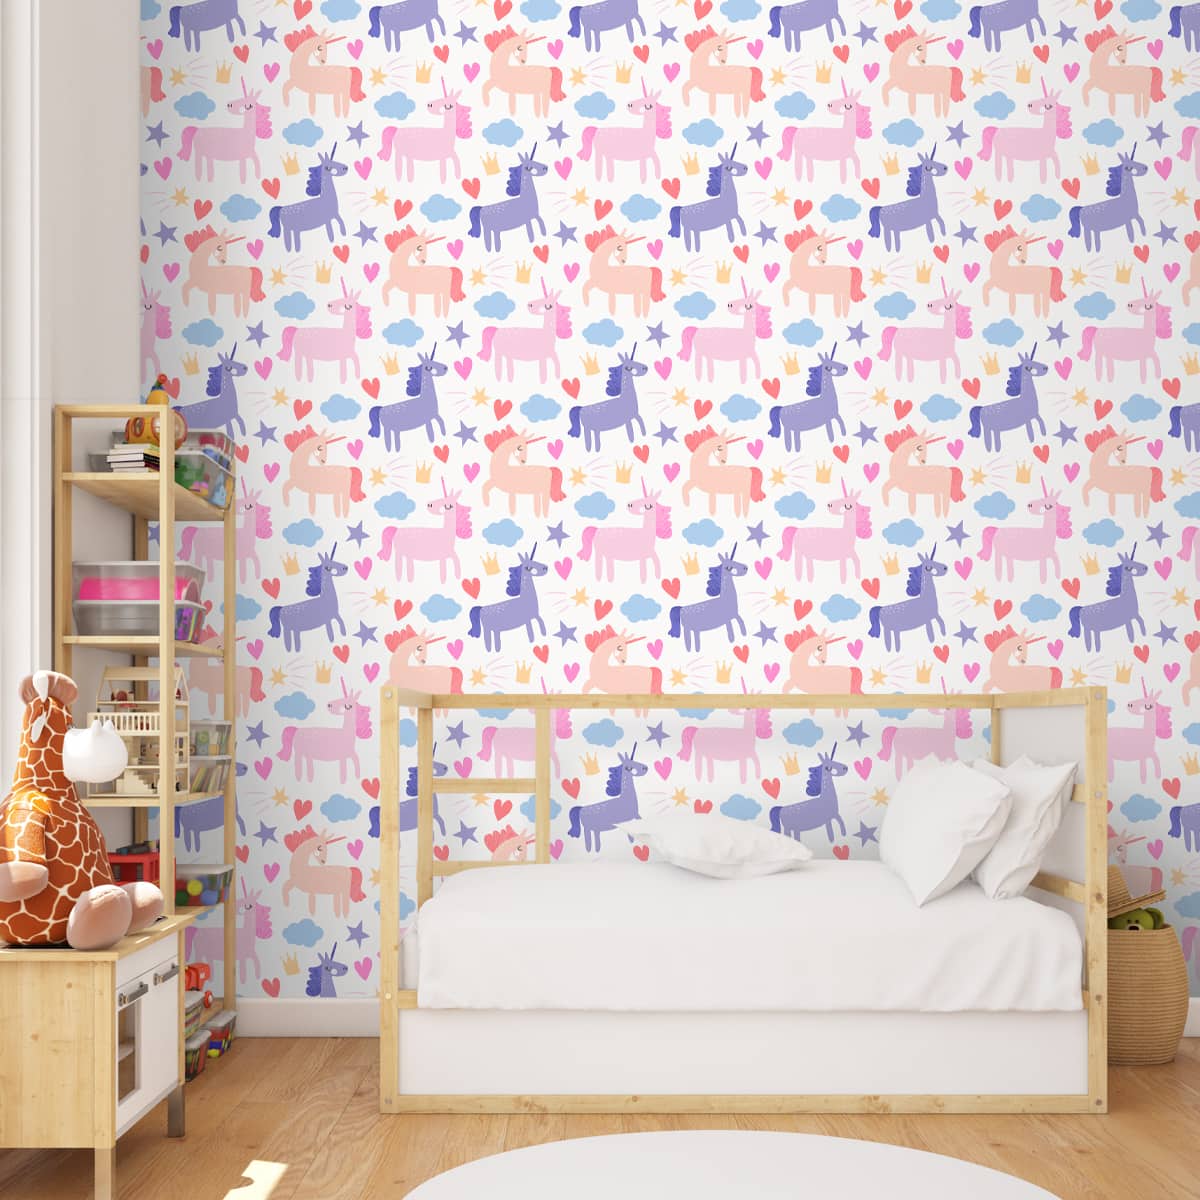 Girls Room Unicorn Wallpaper in Pastel Shades, Customised